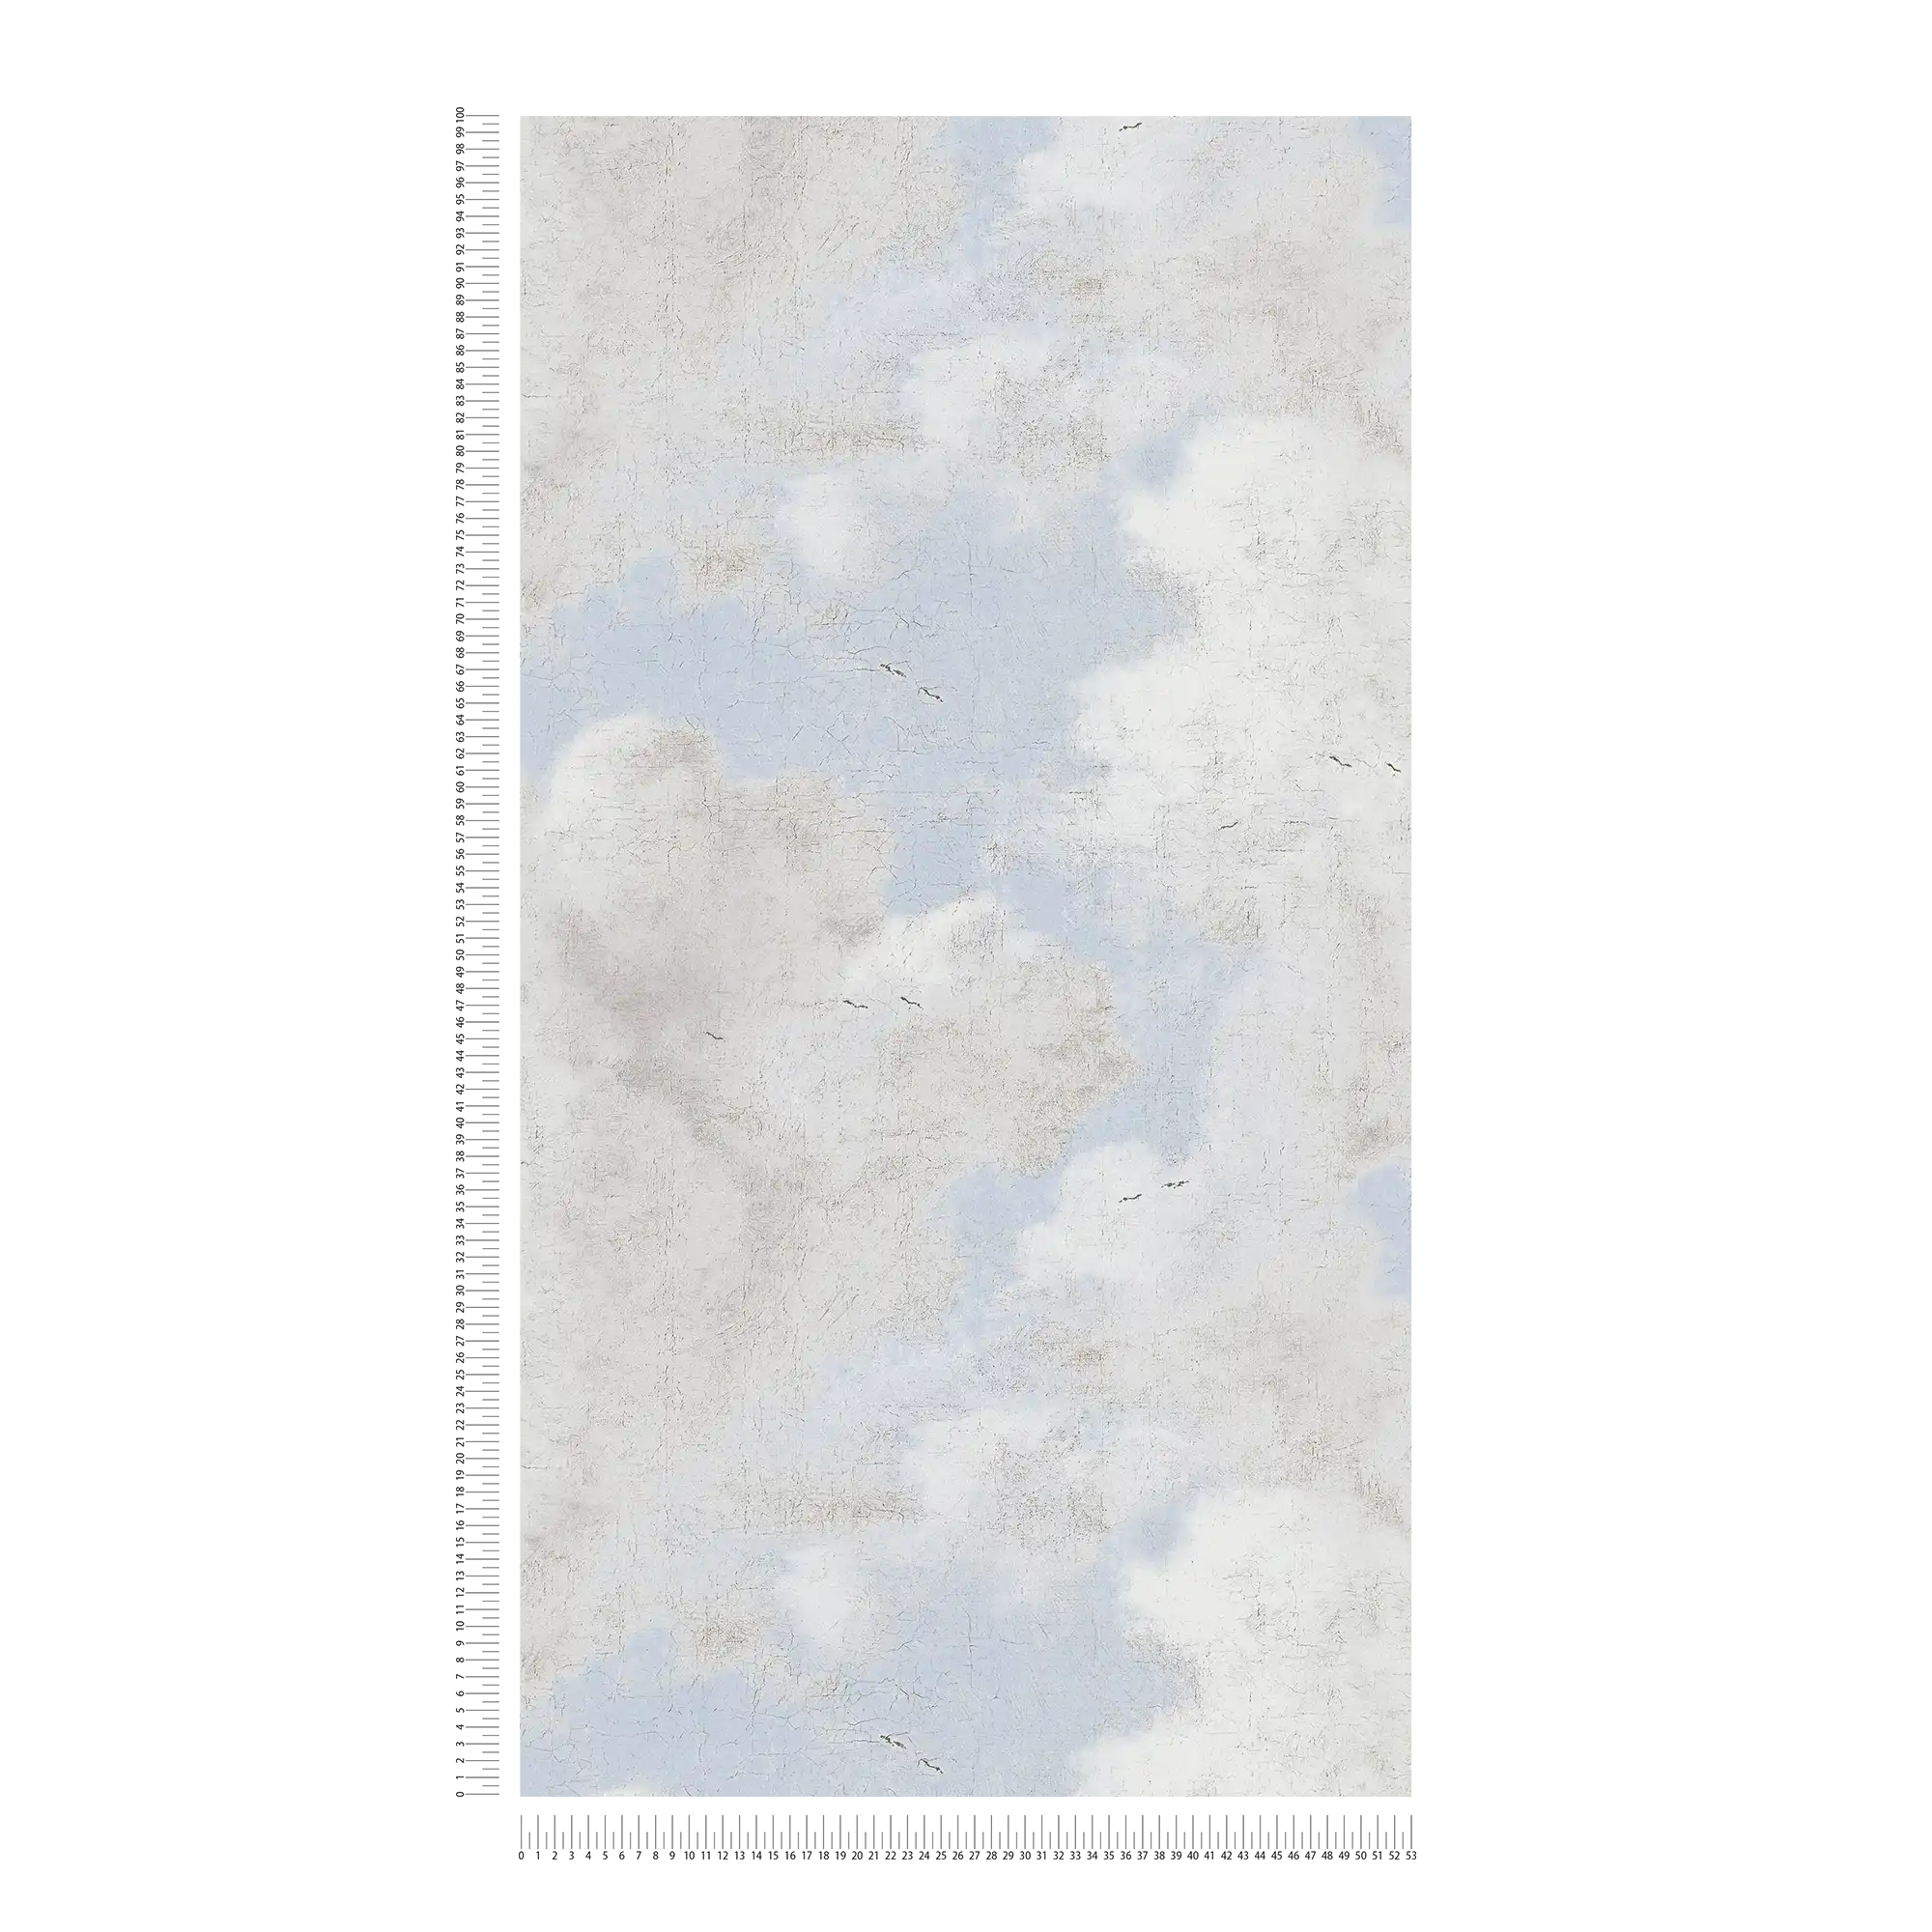             Classic art style sky wallpaper - grey, blue
        